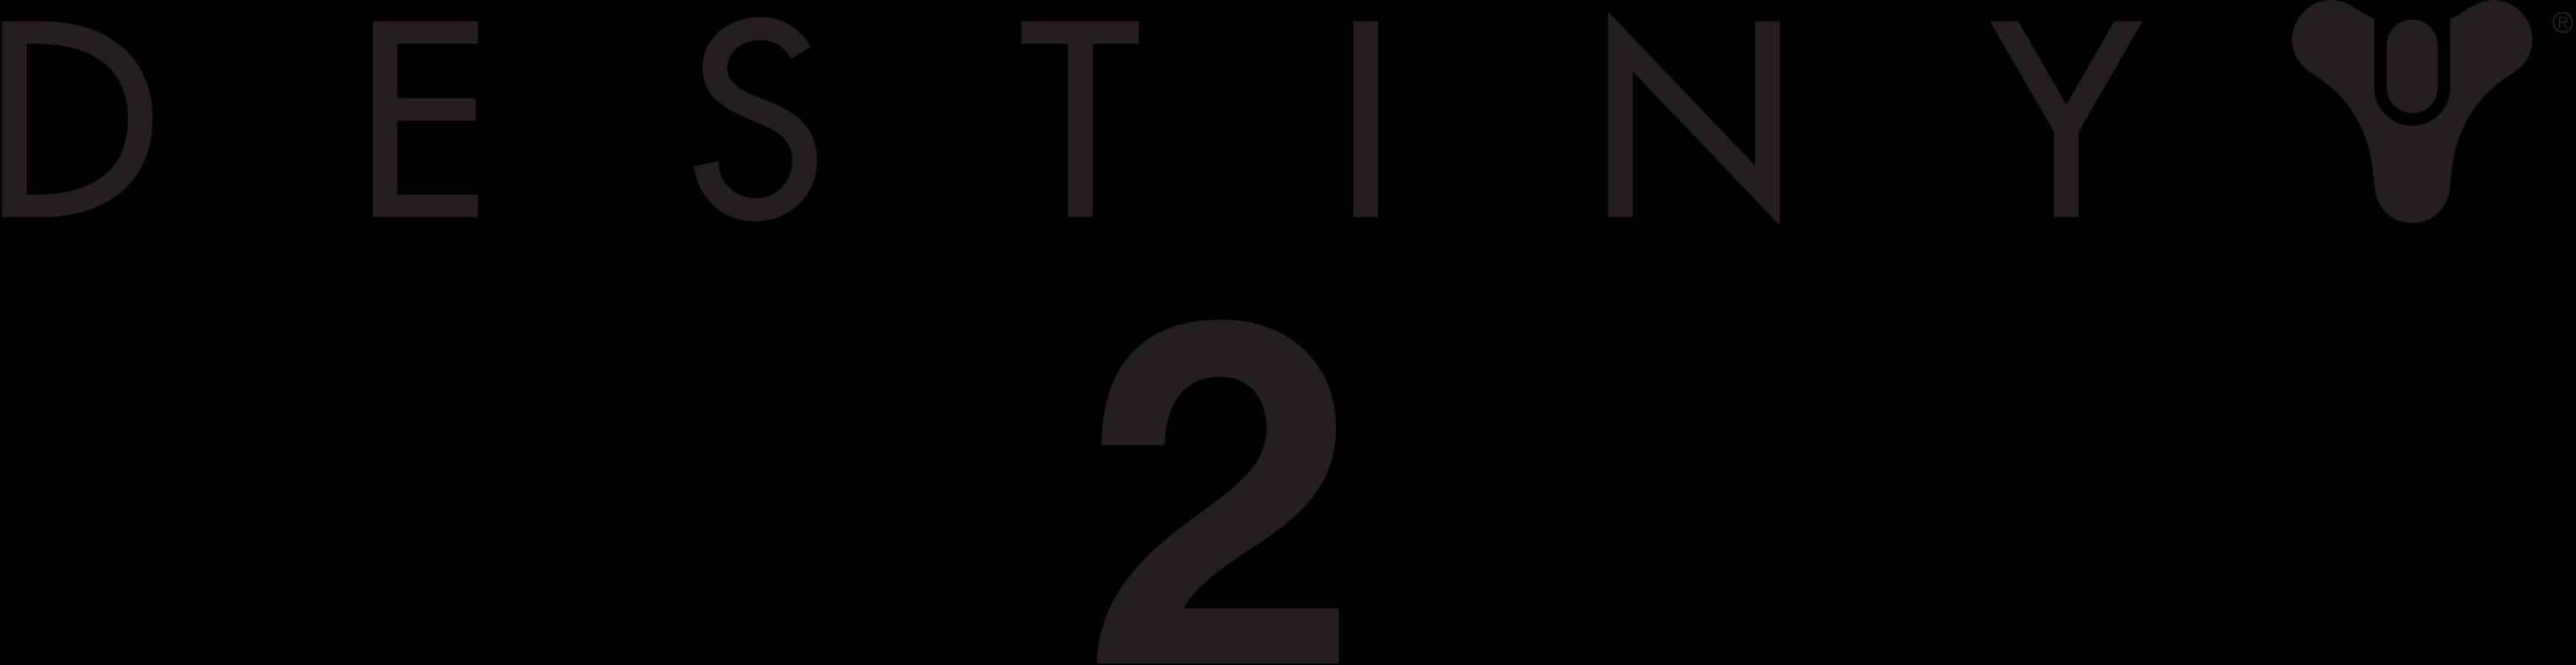 Logo af Destiny 2 med ordet Destiny skrevet med et futuristisk skrifttype Wallpaper